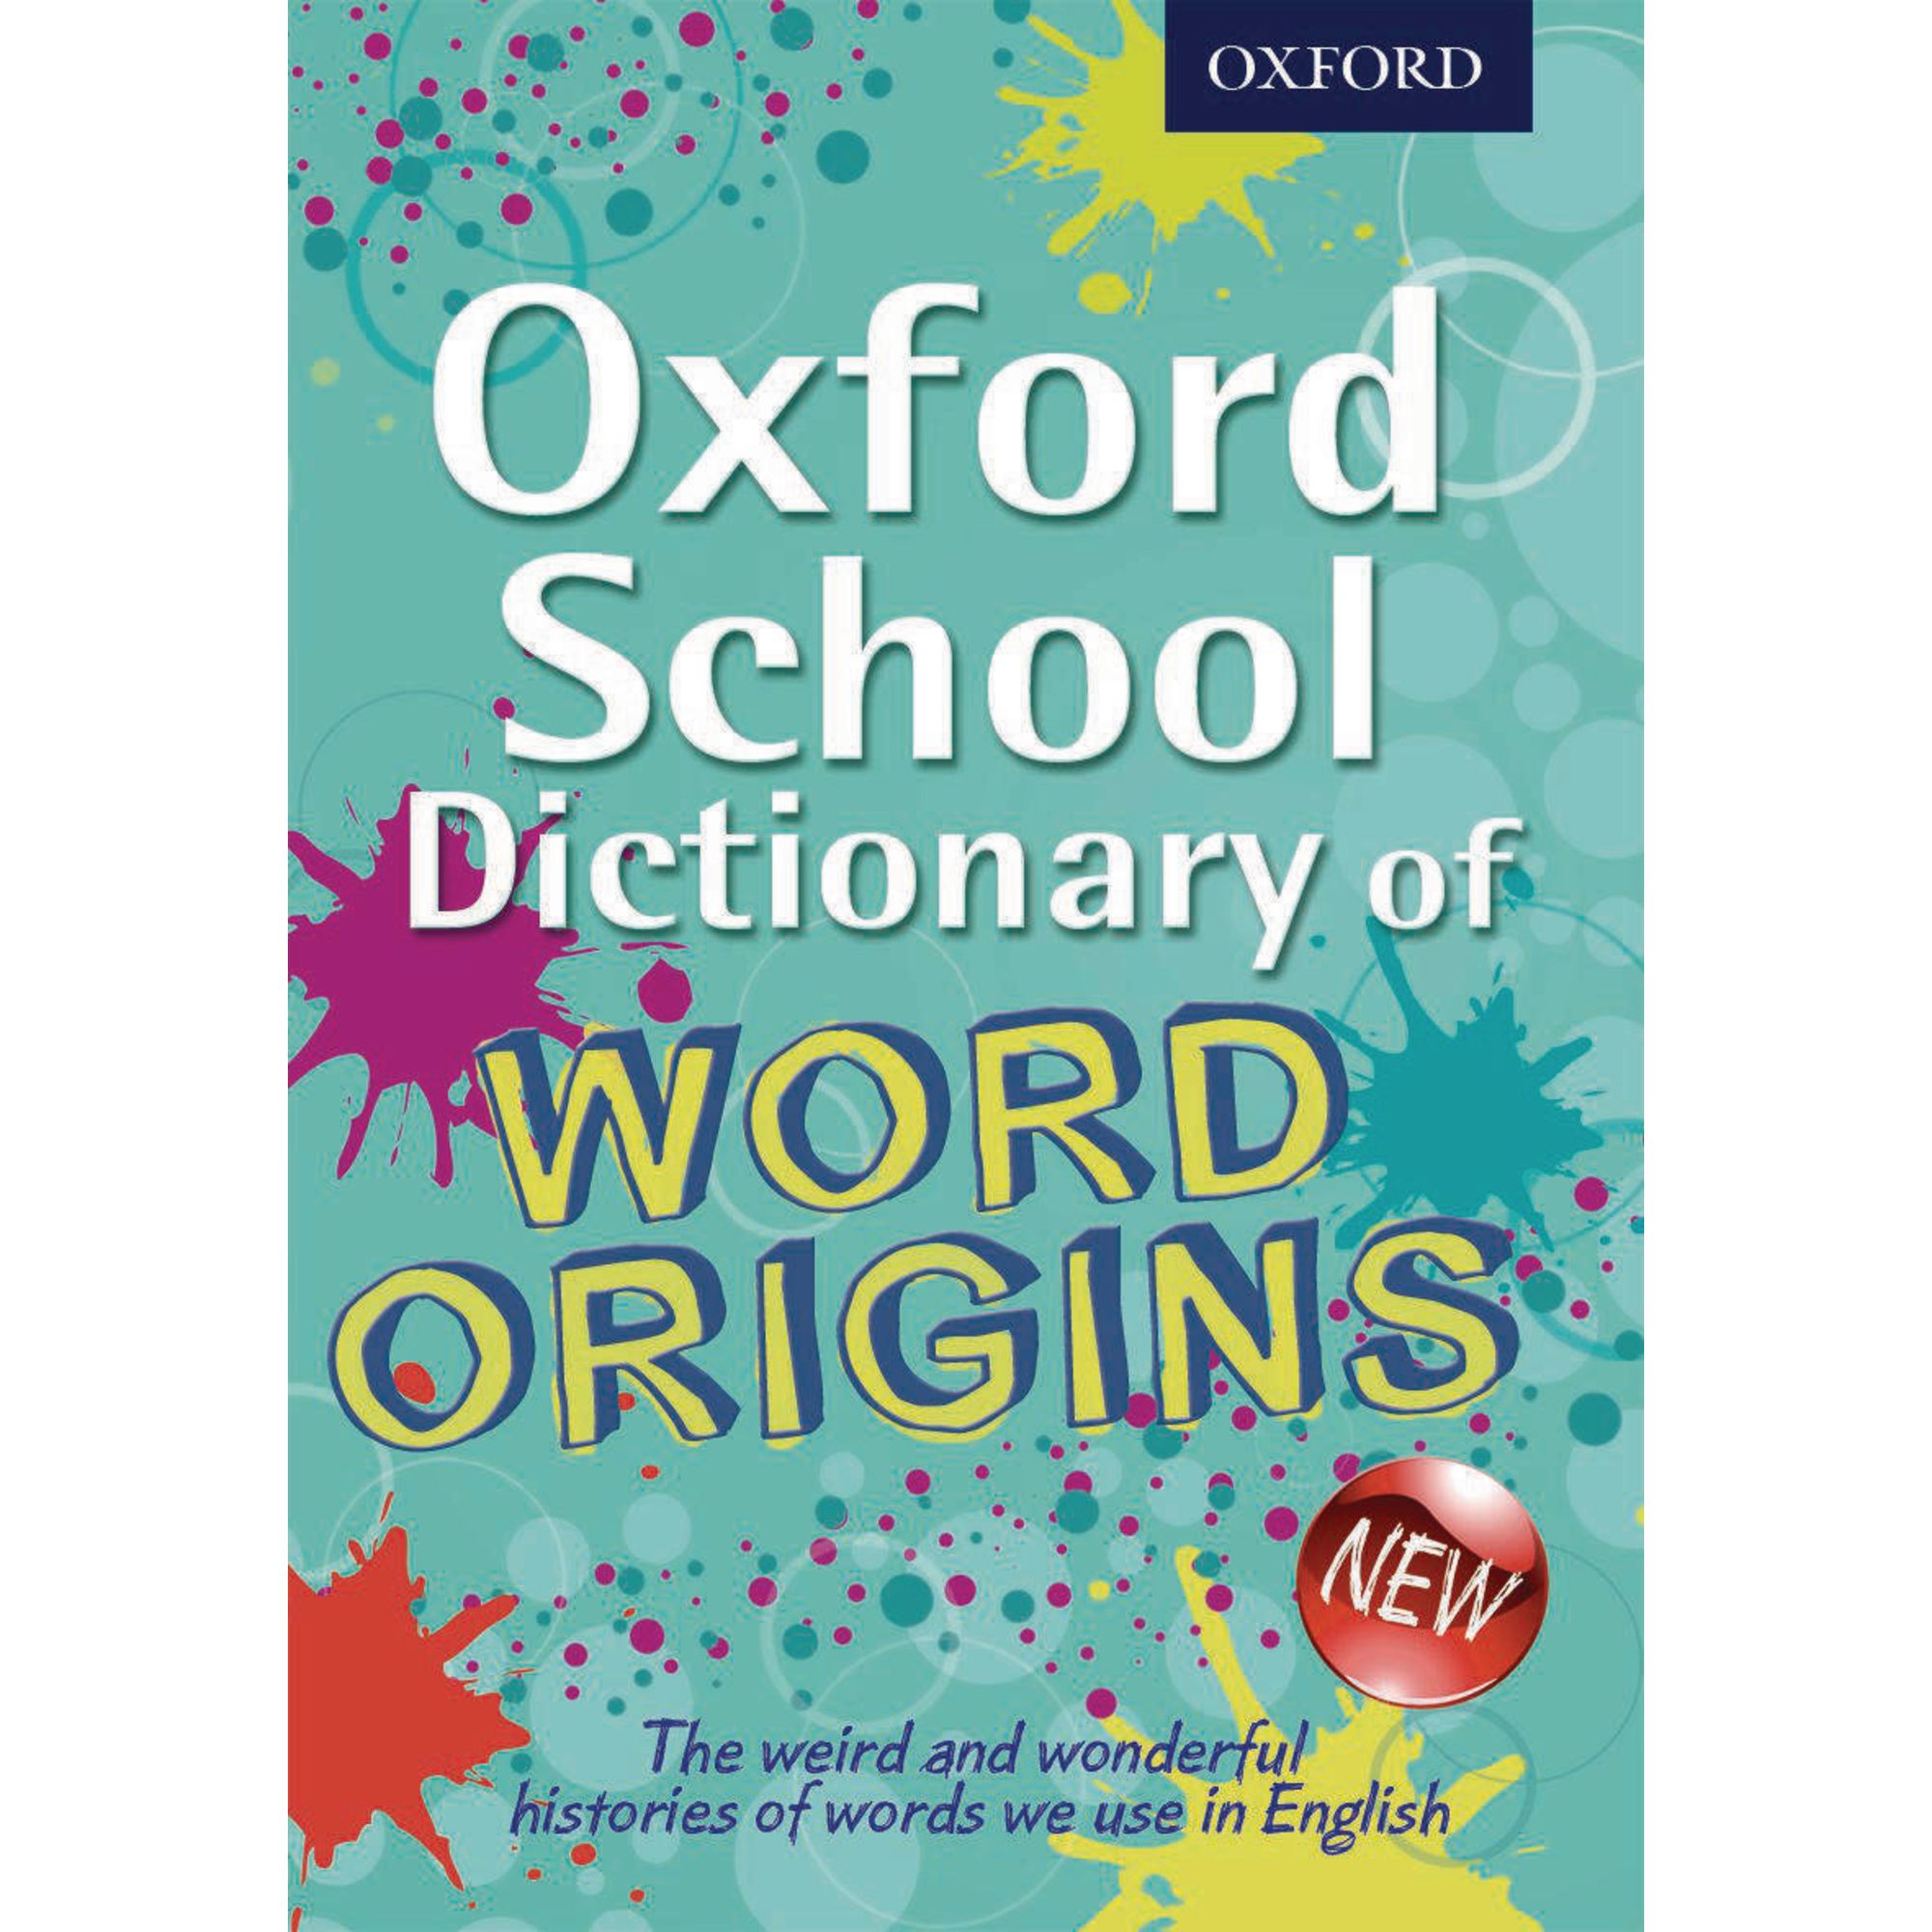 Oxford Dictionary-Word Origins